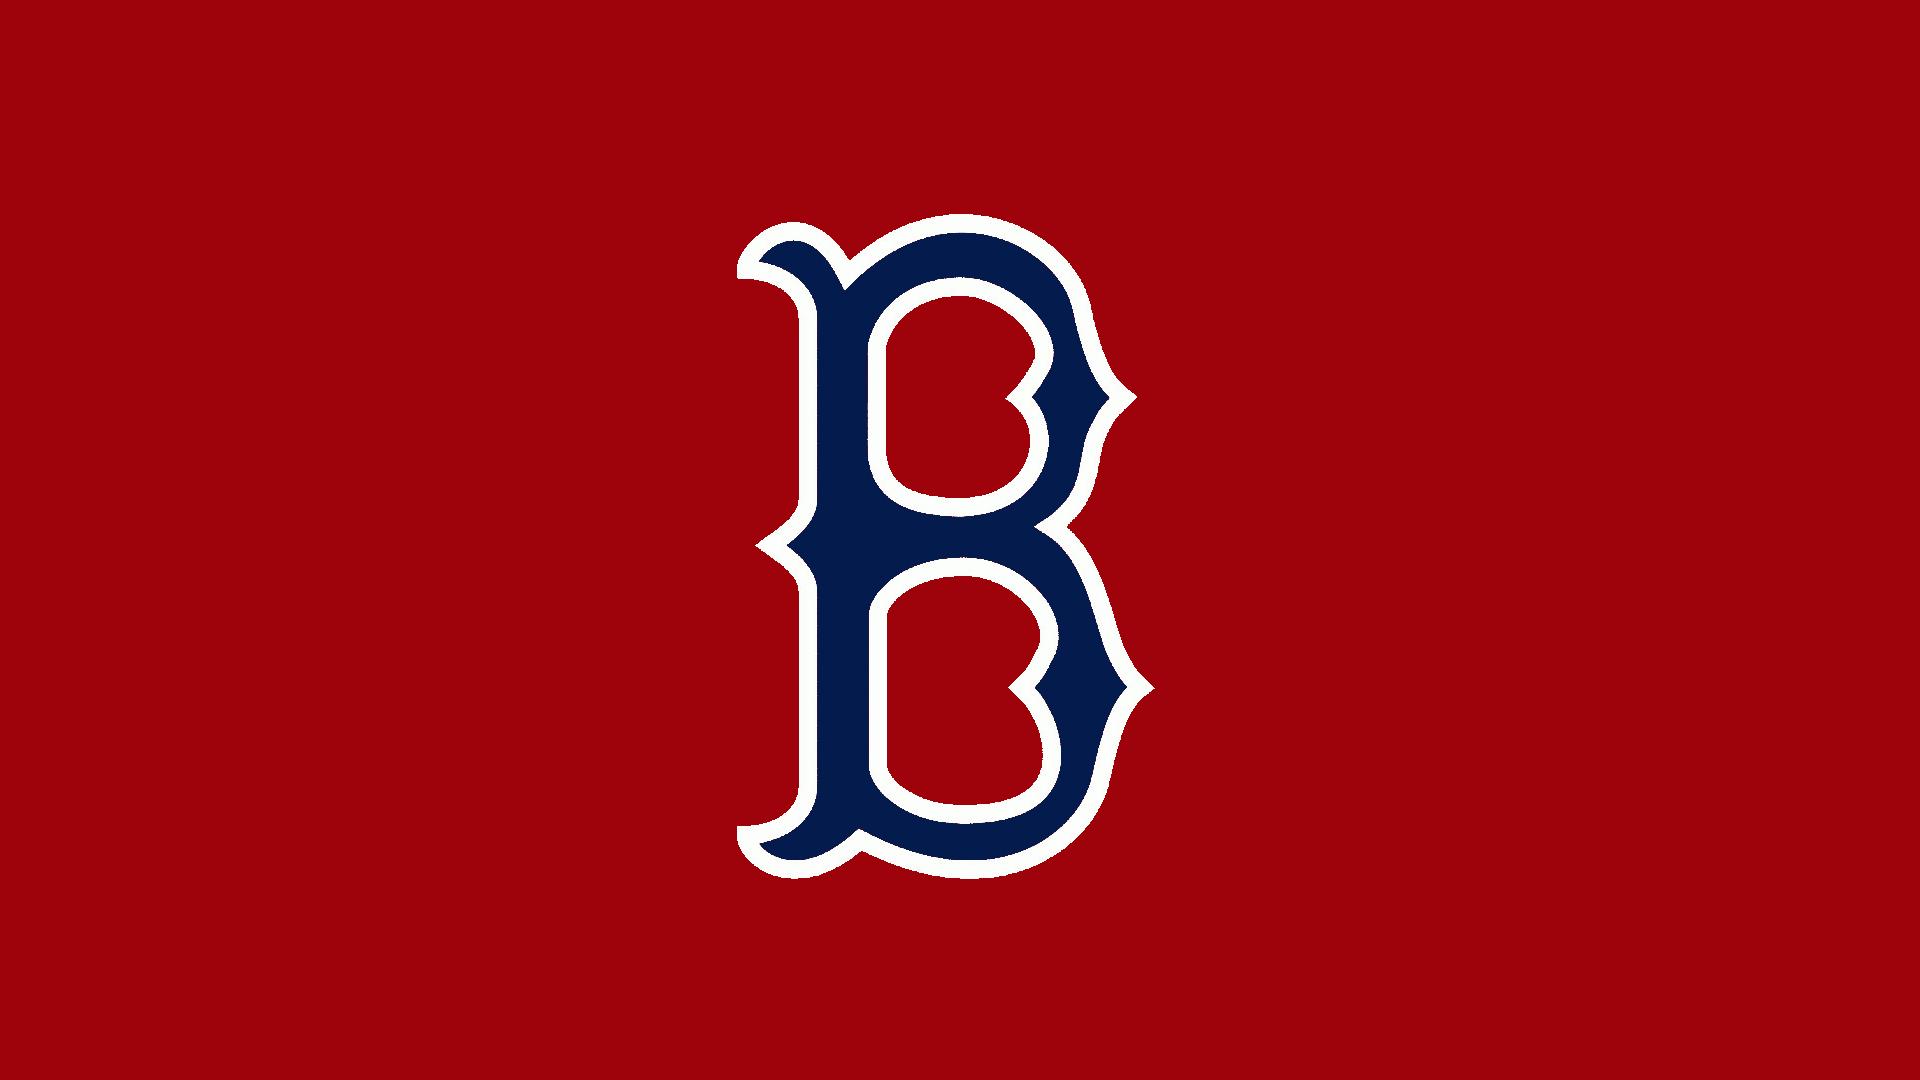 Free Boston Red Sox Wallpaper, Download Free Clip Art, Free